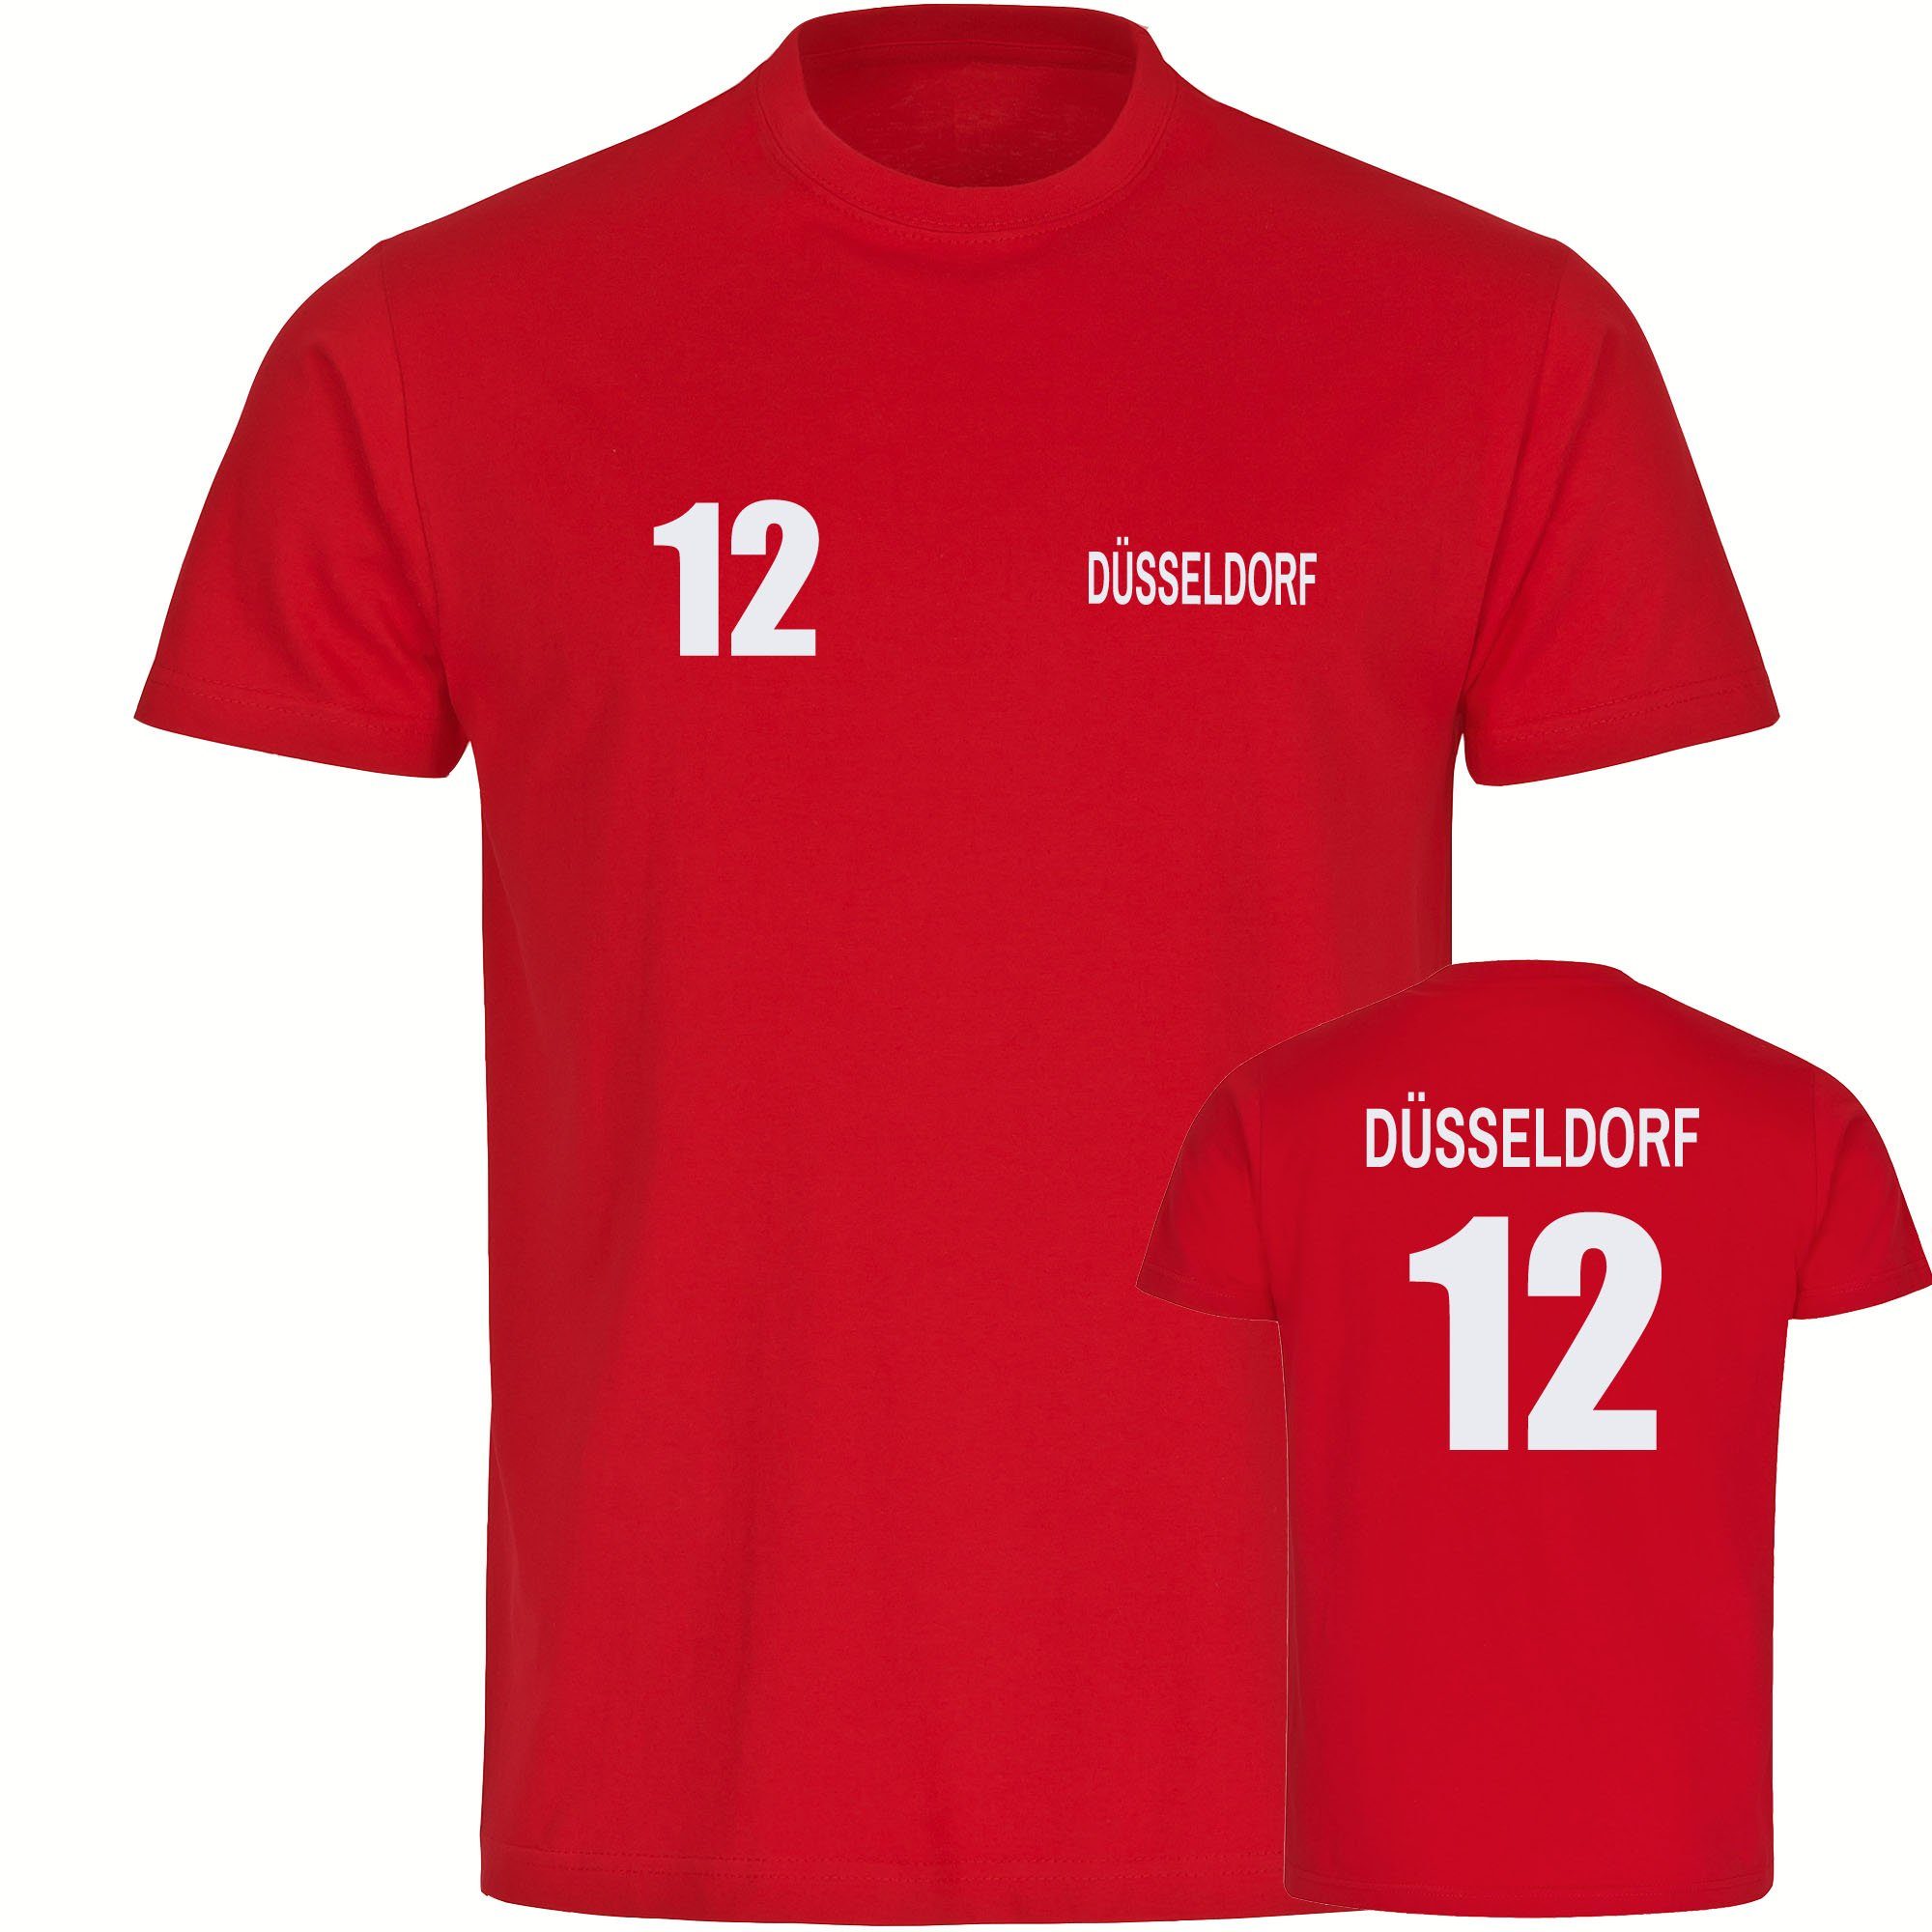 multifanshop T-Shirt Herren Düsseldorf - Trikot 12 - Männer